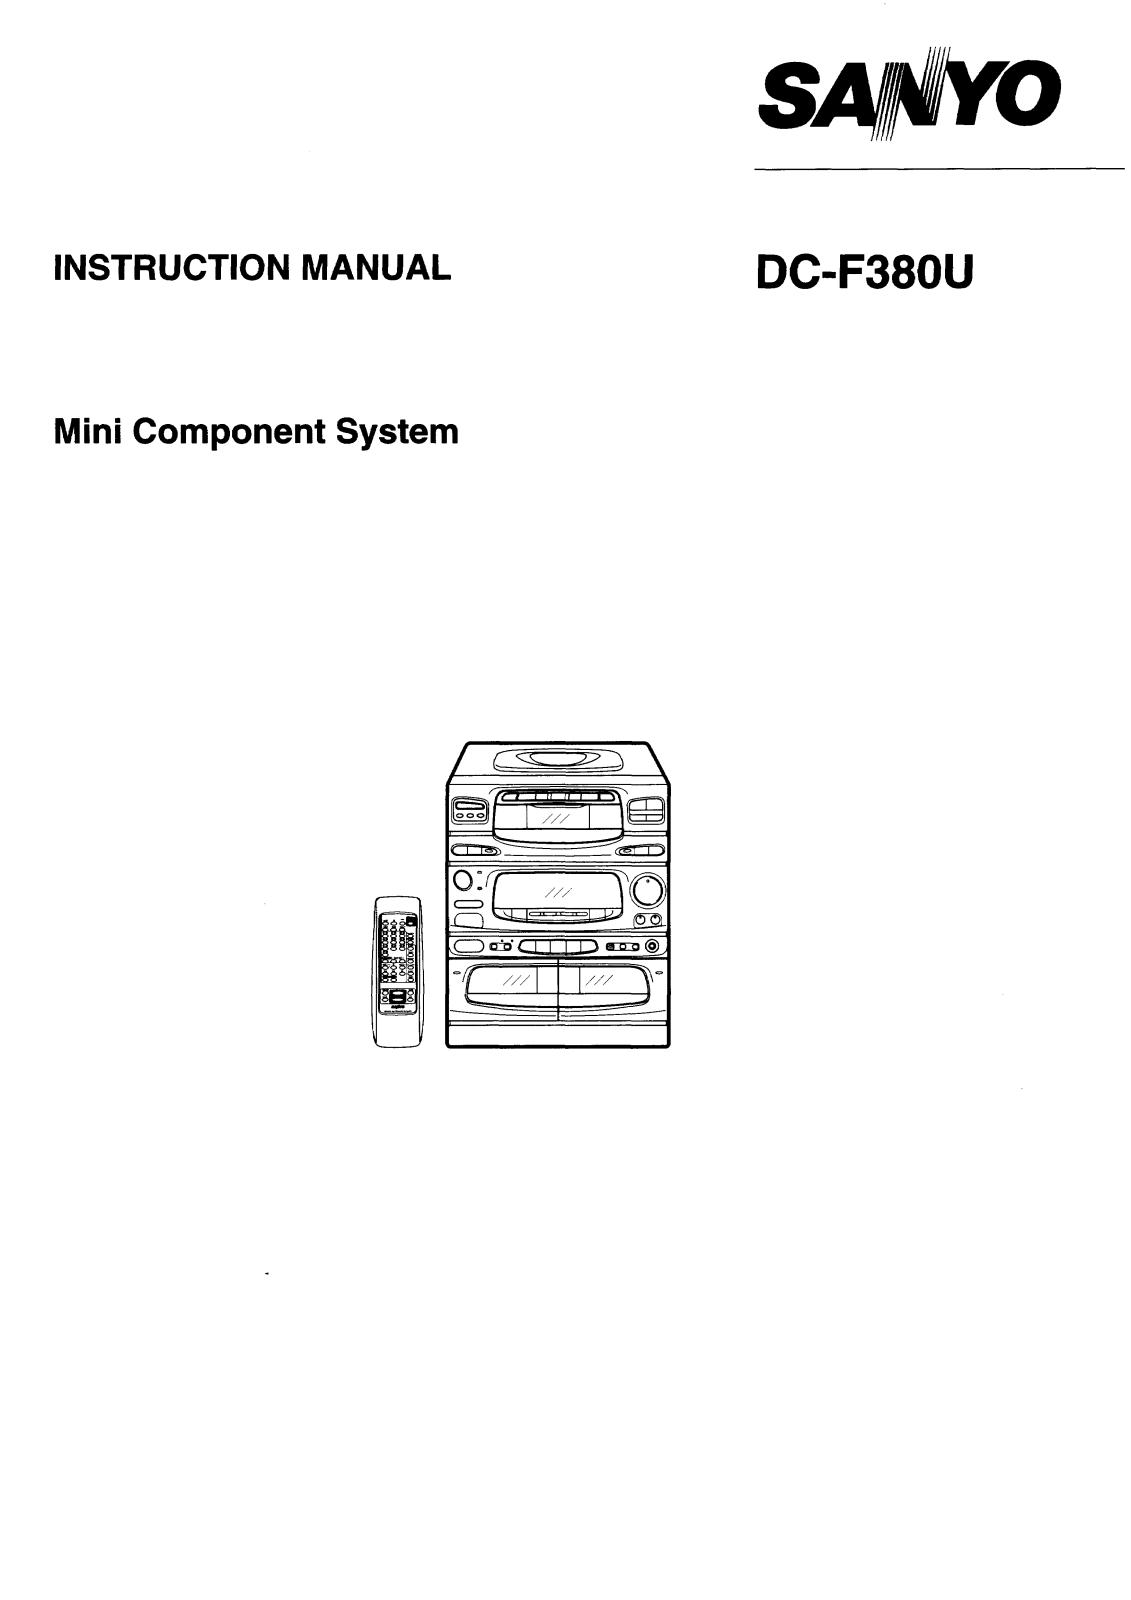 Sanyo DC-F380U Instruction Manual